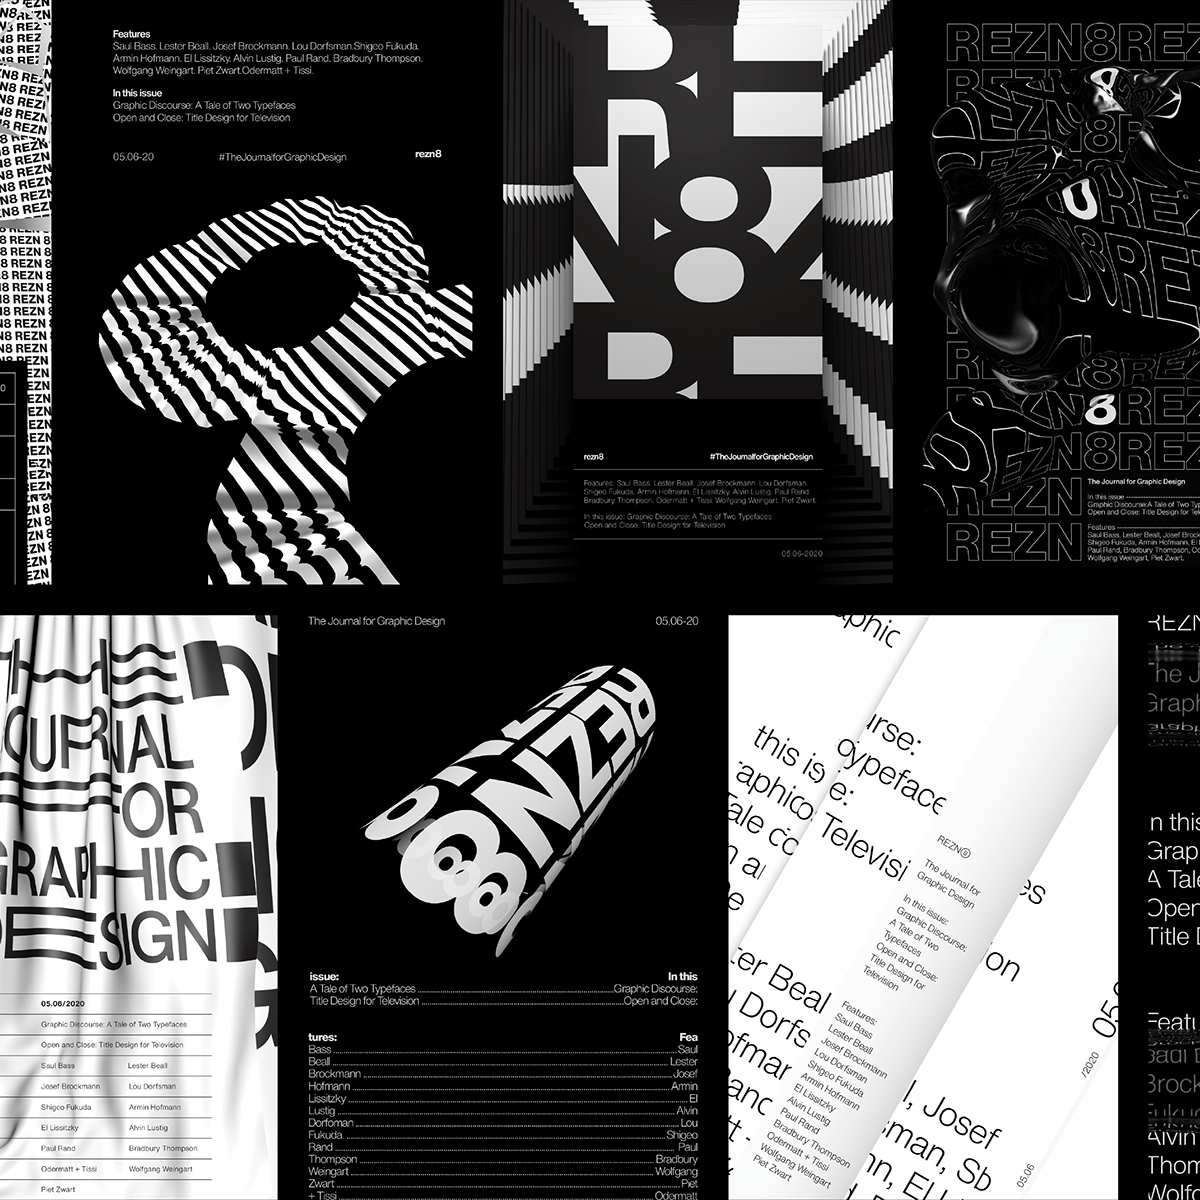 Rezn8 | The Journal For Graphic Design on Behance